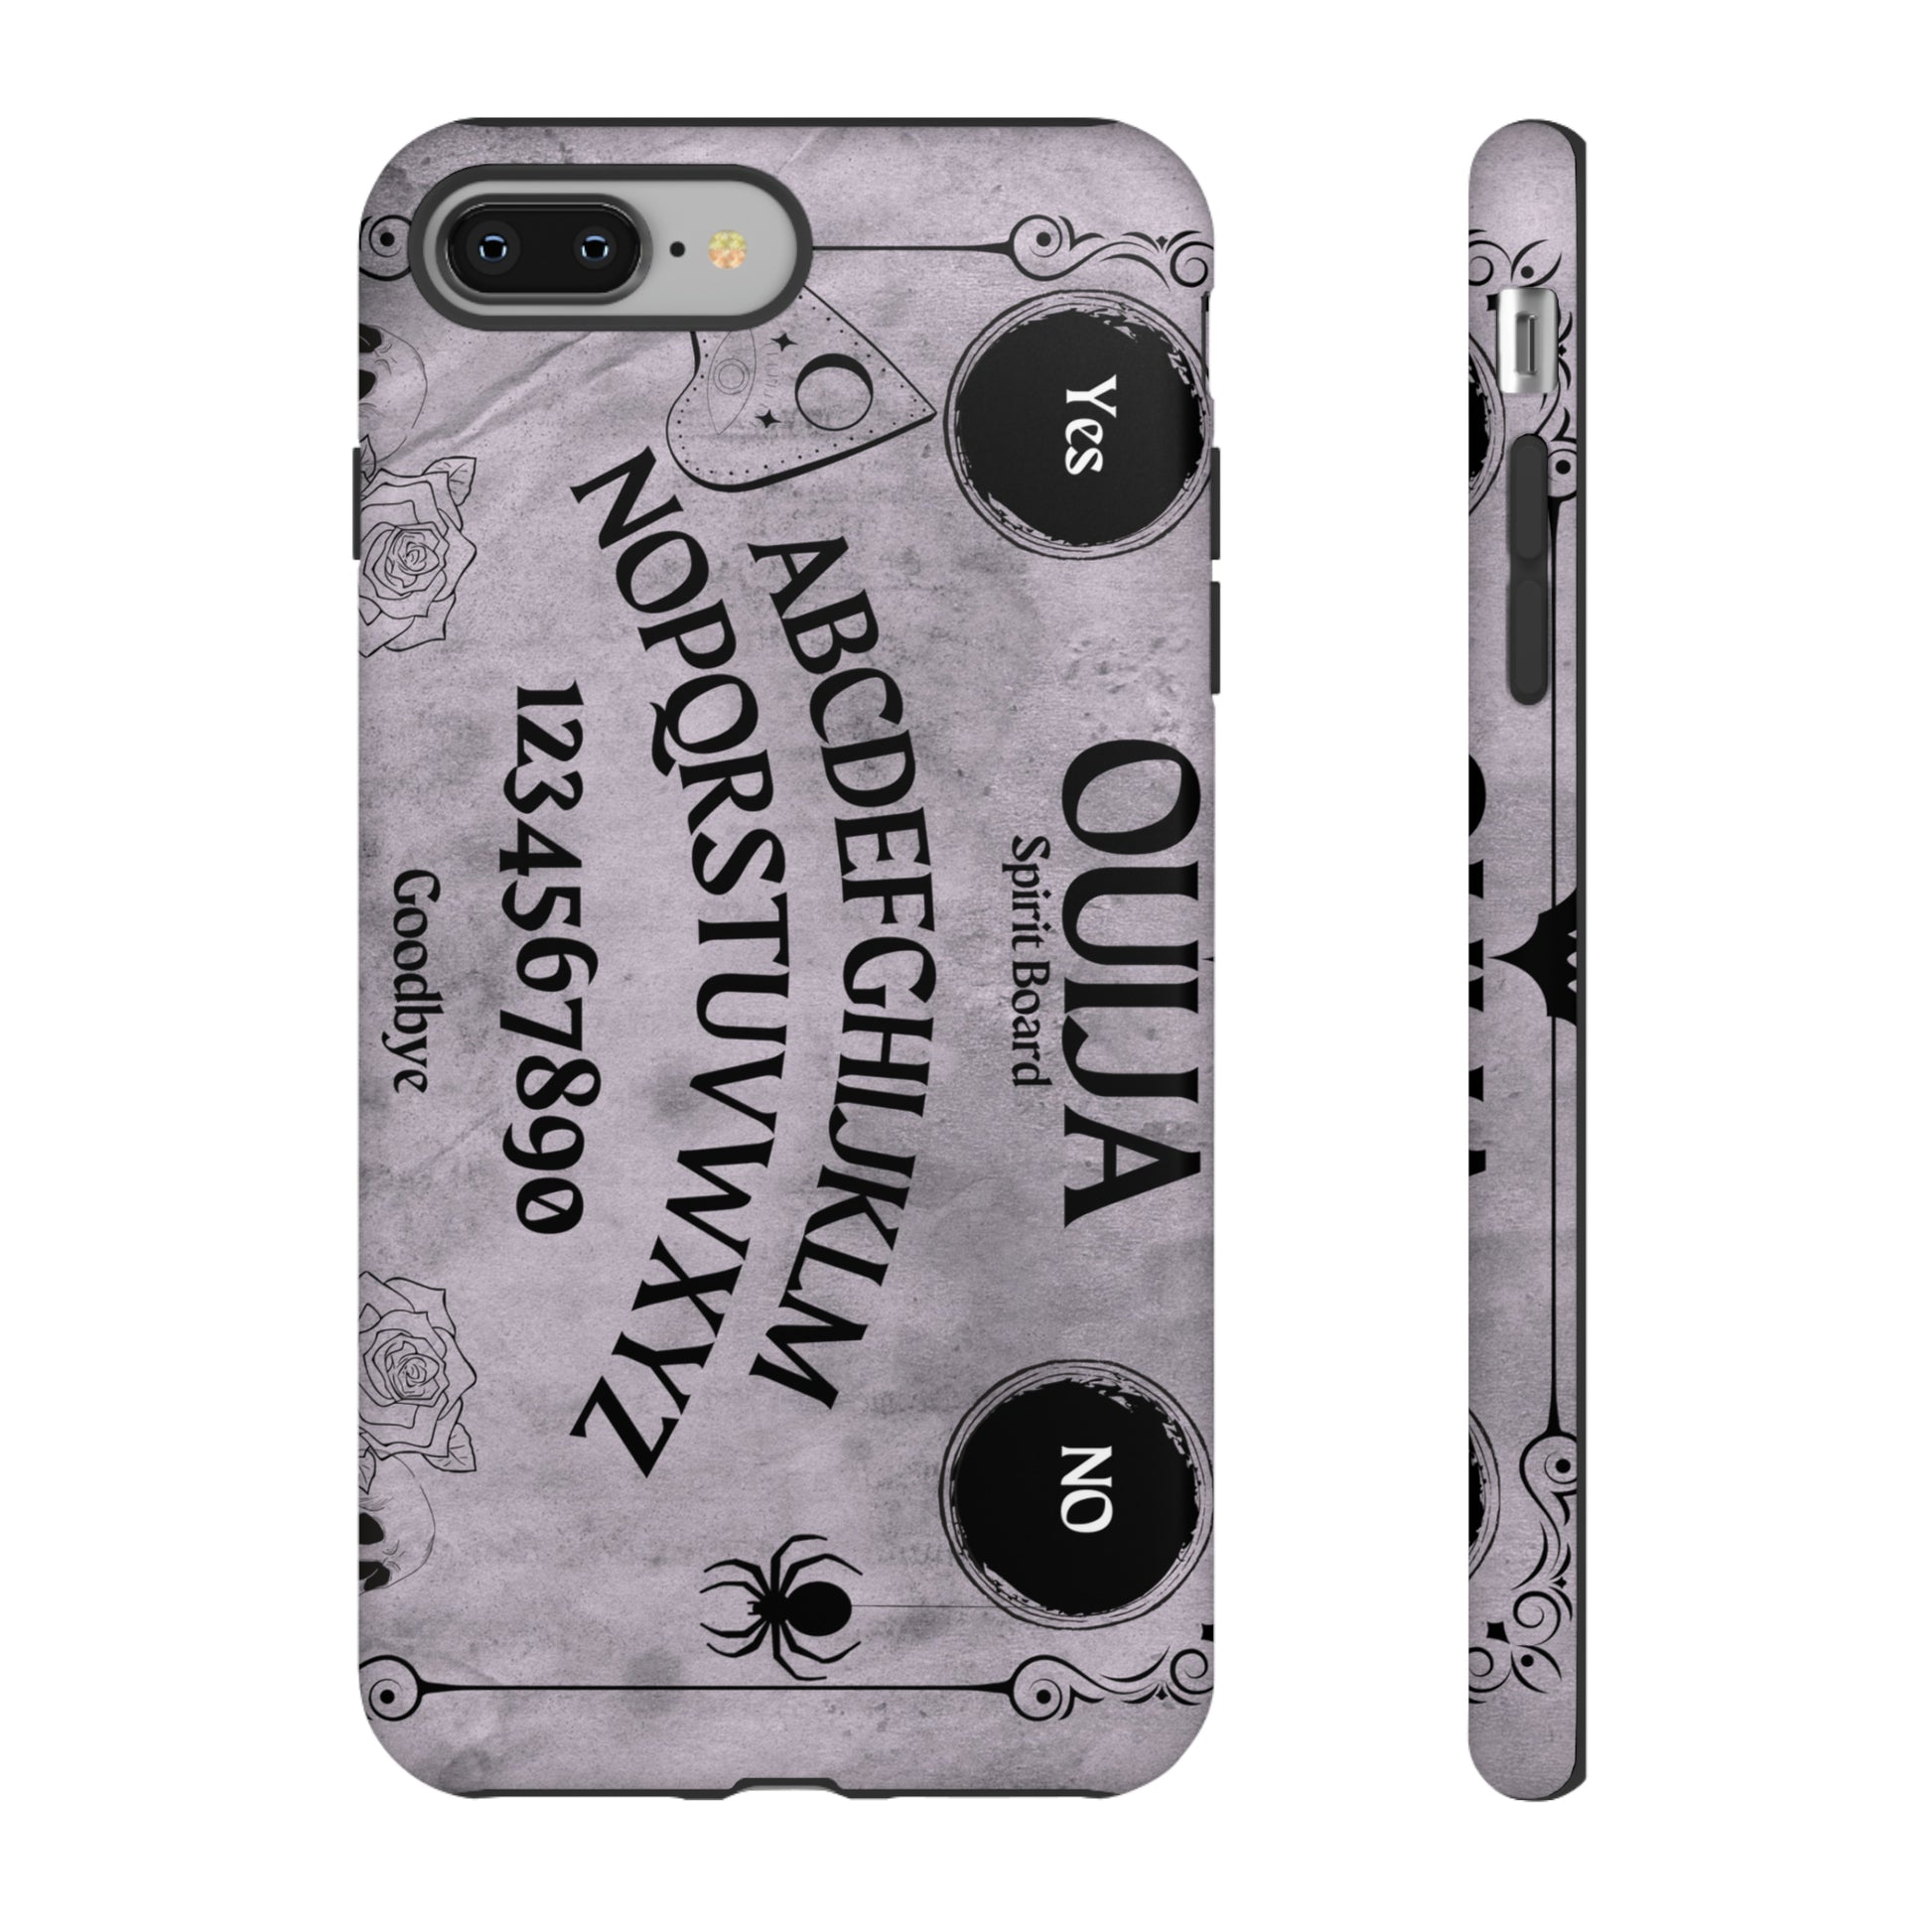 Ouija Board Tough Phone Cases For Samsung iPhone GooglePhone CaseVTZdesignsiPhone 8 PlusMatteAccessoriesGlossyhalloween